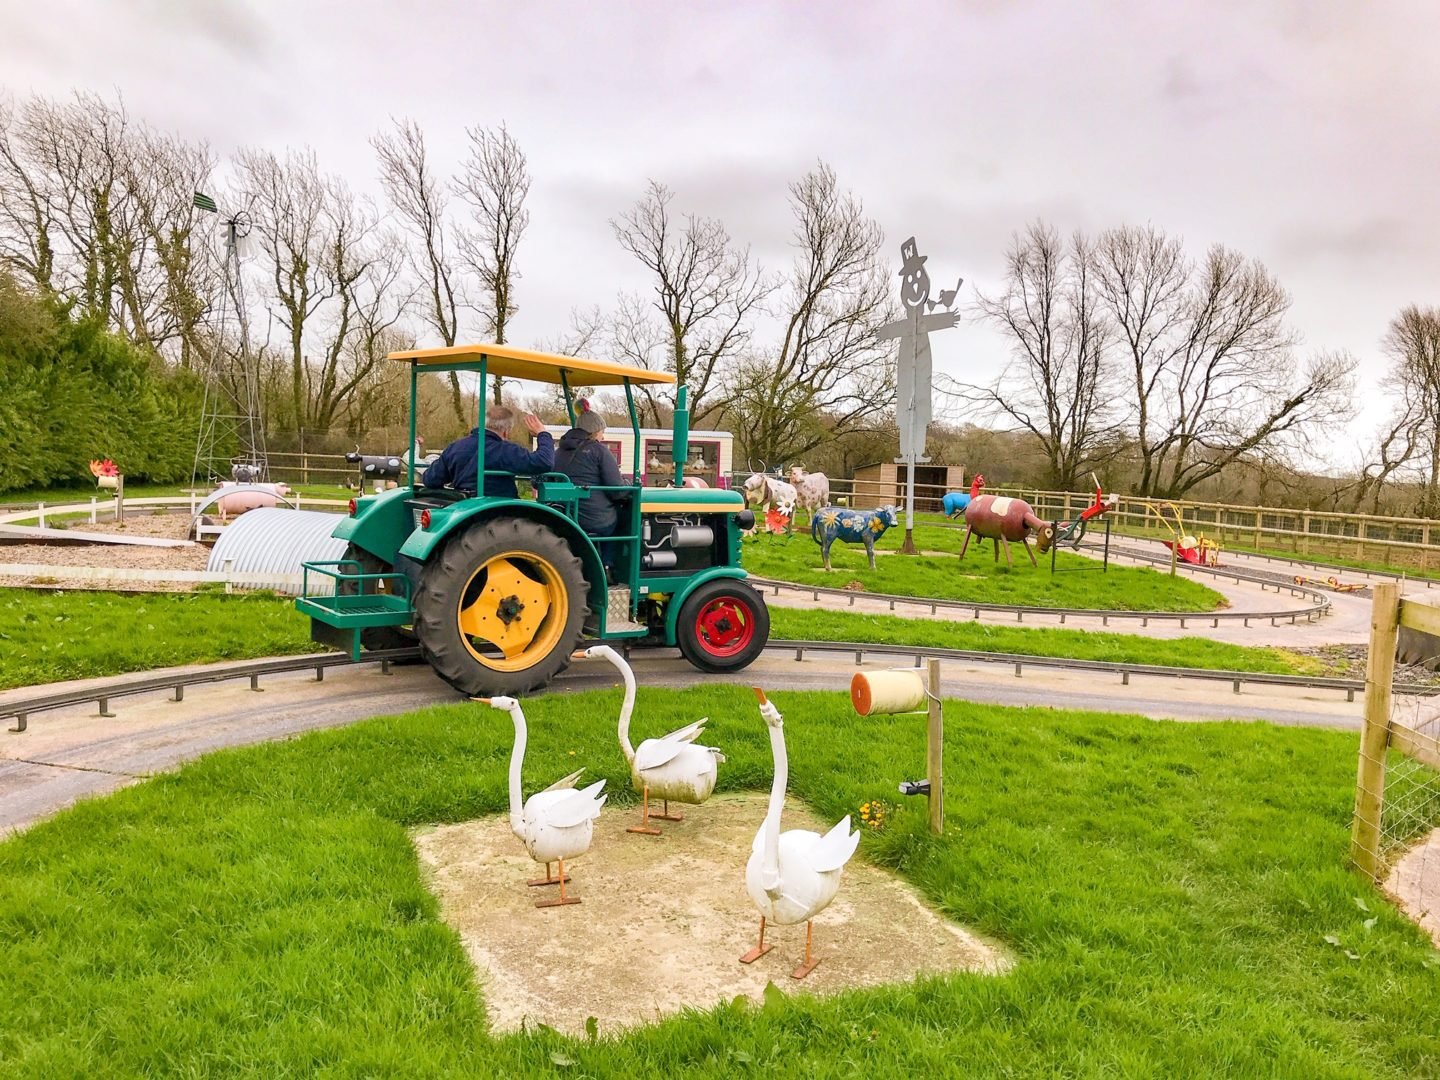 Woodlands family theme park Tractor ride near kingswear